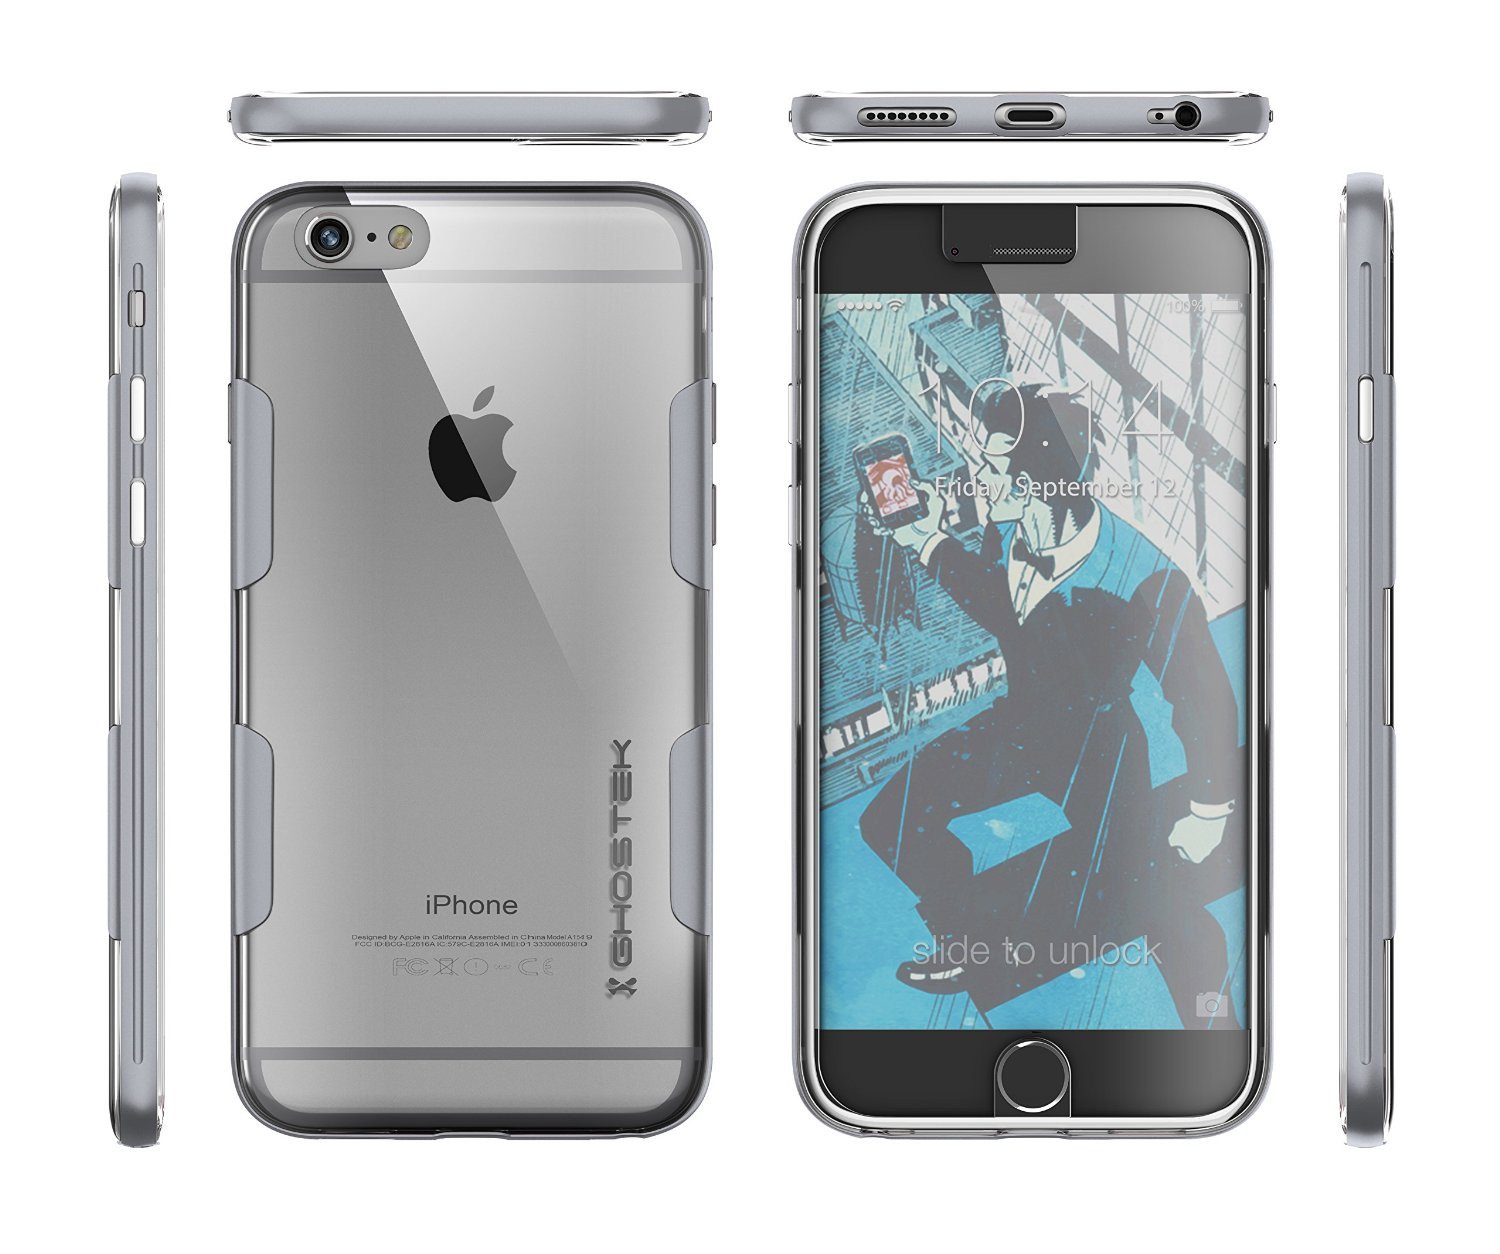 iPhone 6s Plus Case Silver Ghostek Cloak, Slim Protective w/ Tempered Glass | Lifetime Warranty - PunkCase NZ